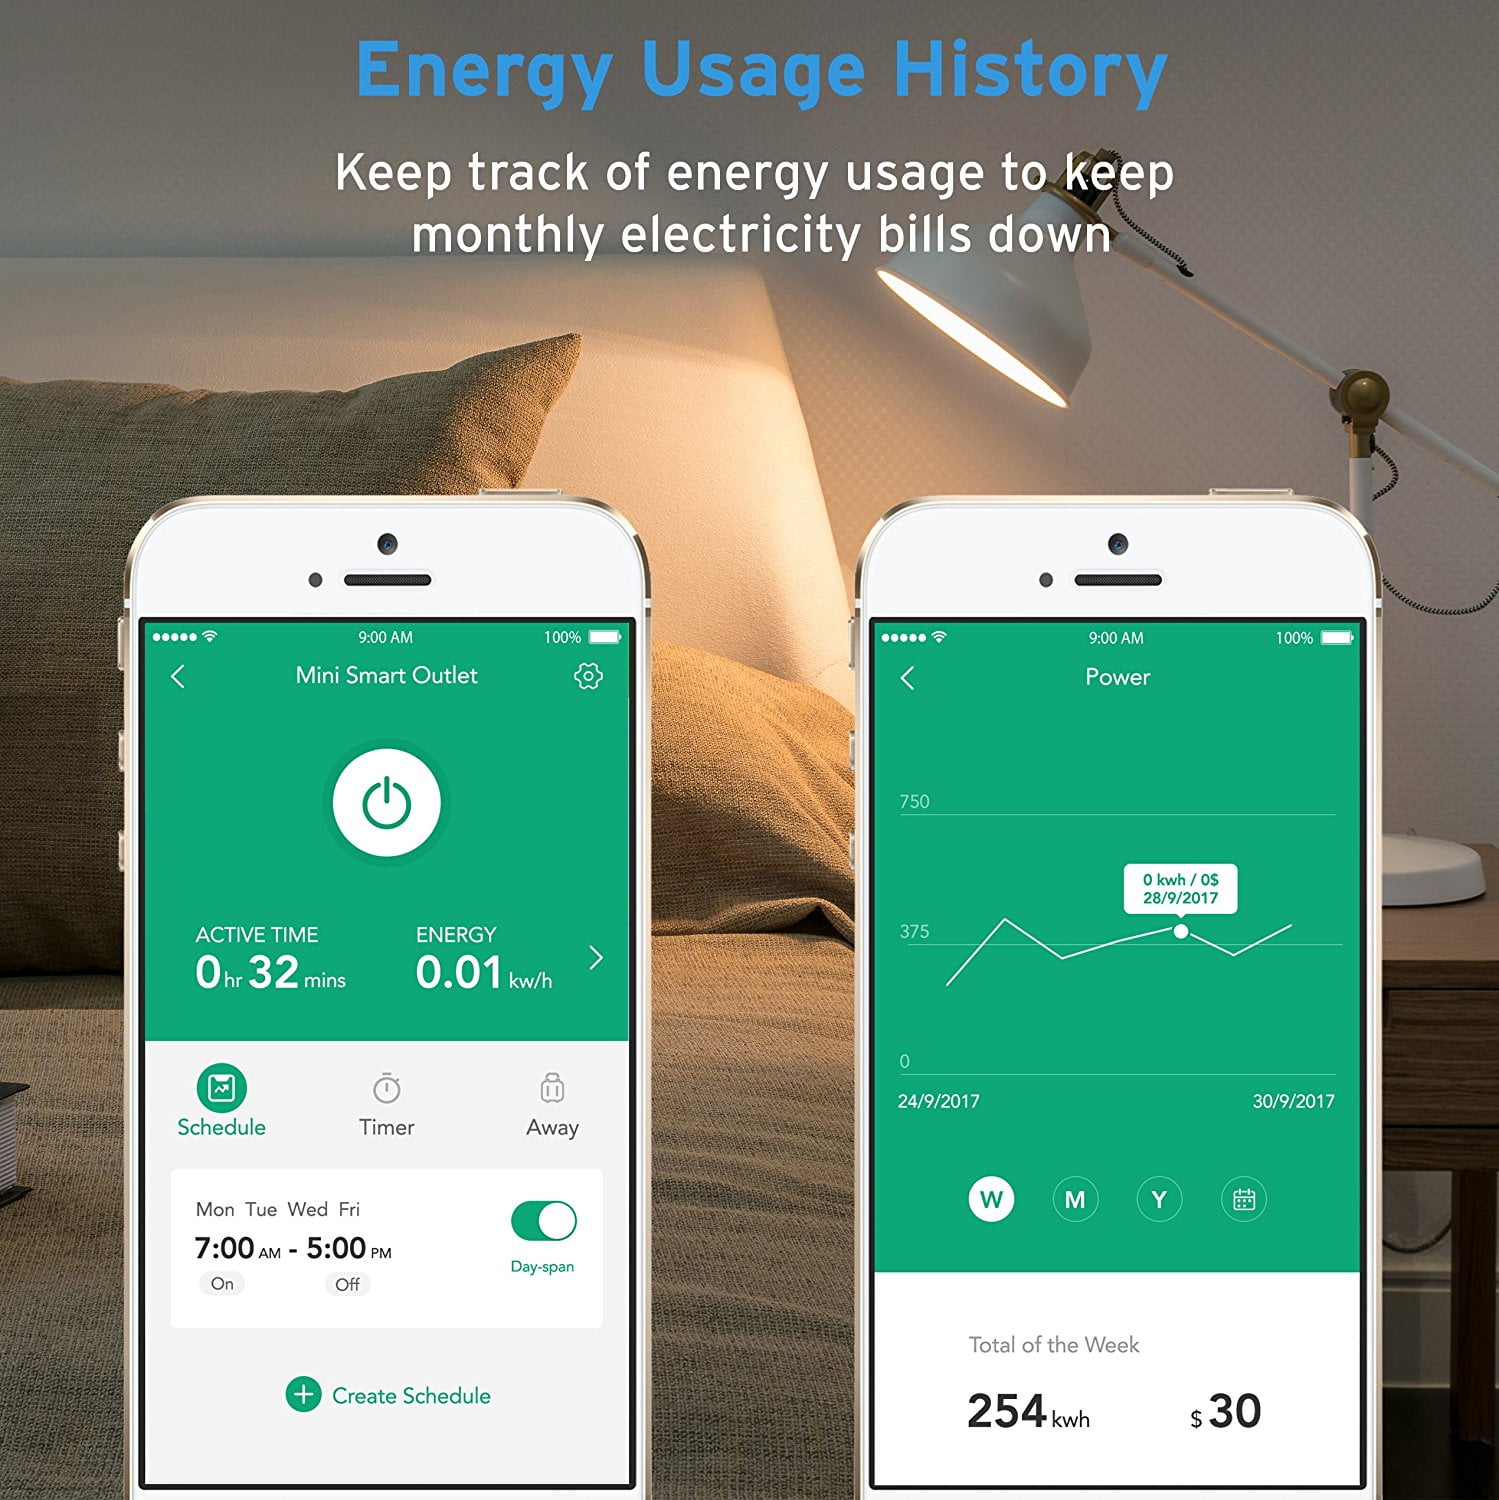 Etekcity ESW15 WiFi Energy Monitoring Smart Plug, Works with Alexa